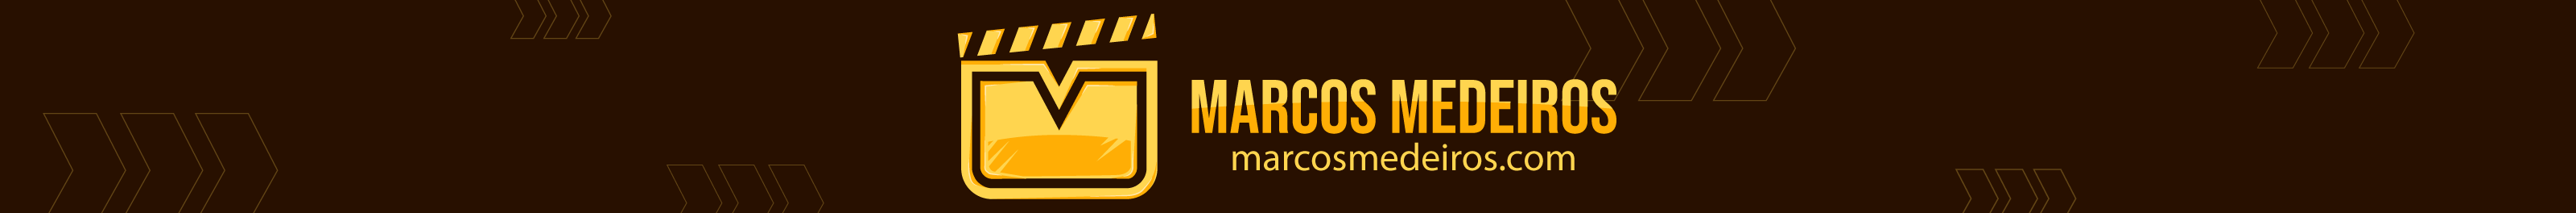 MARCOS MEDEIROS's profile banner